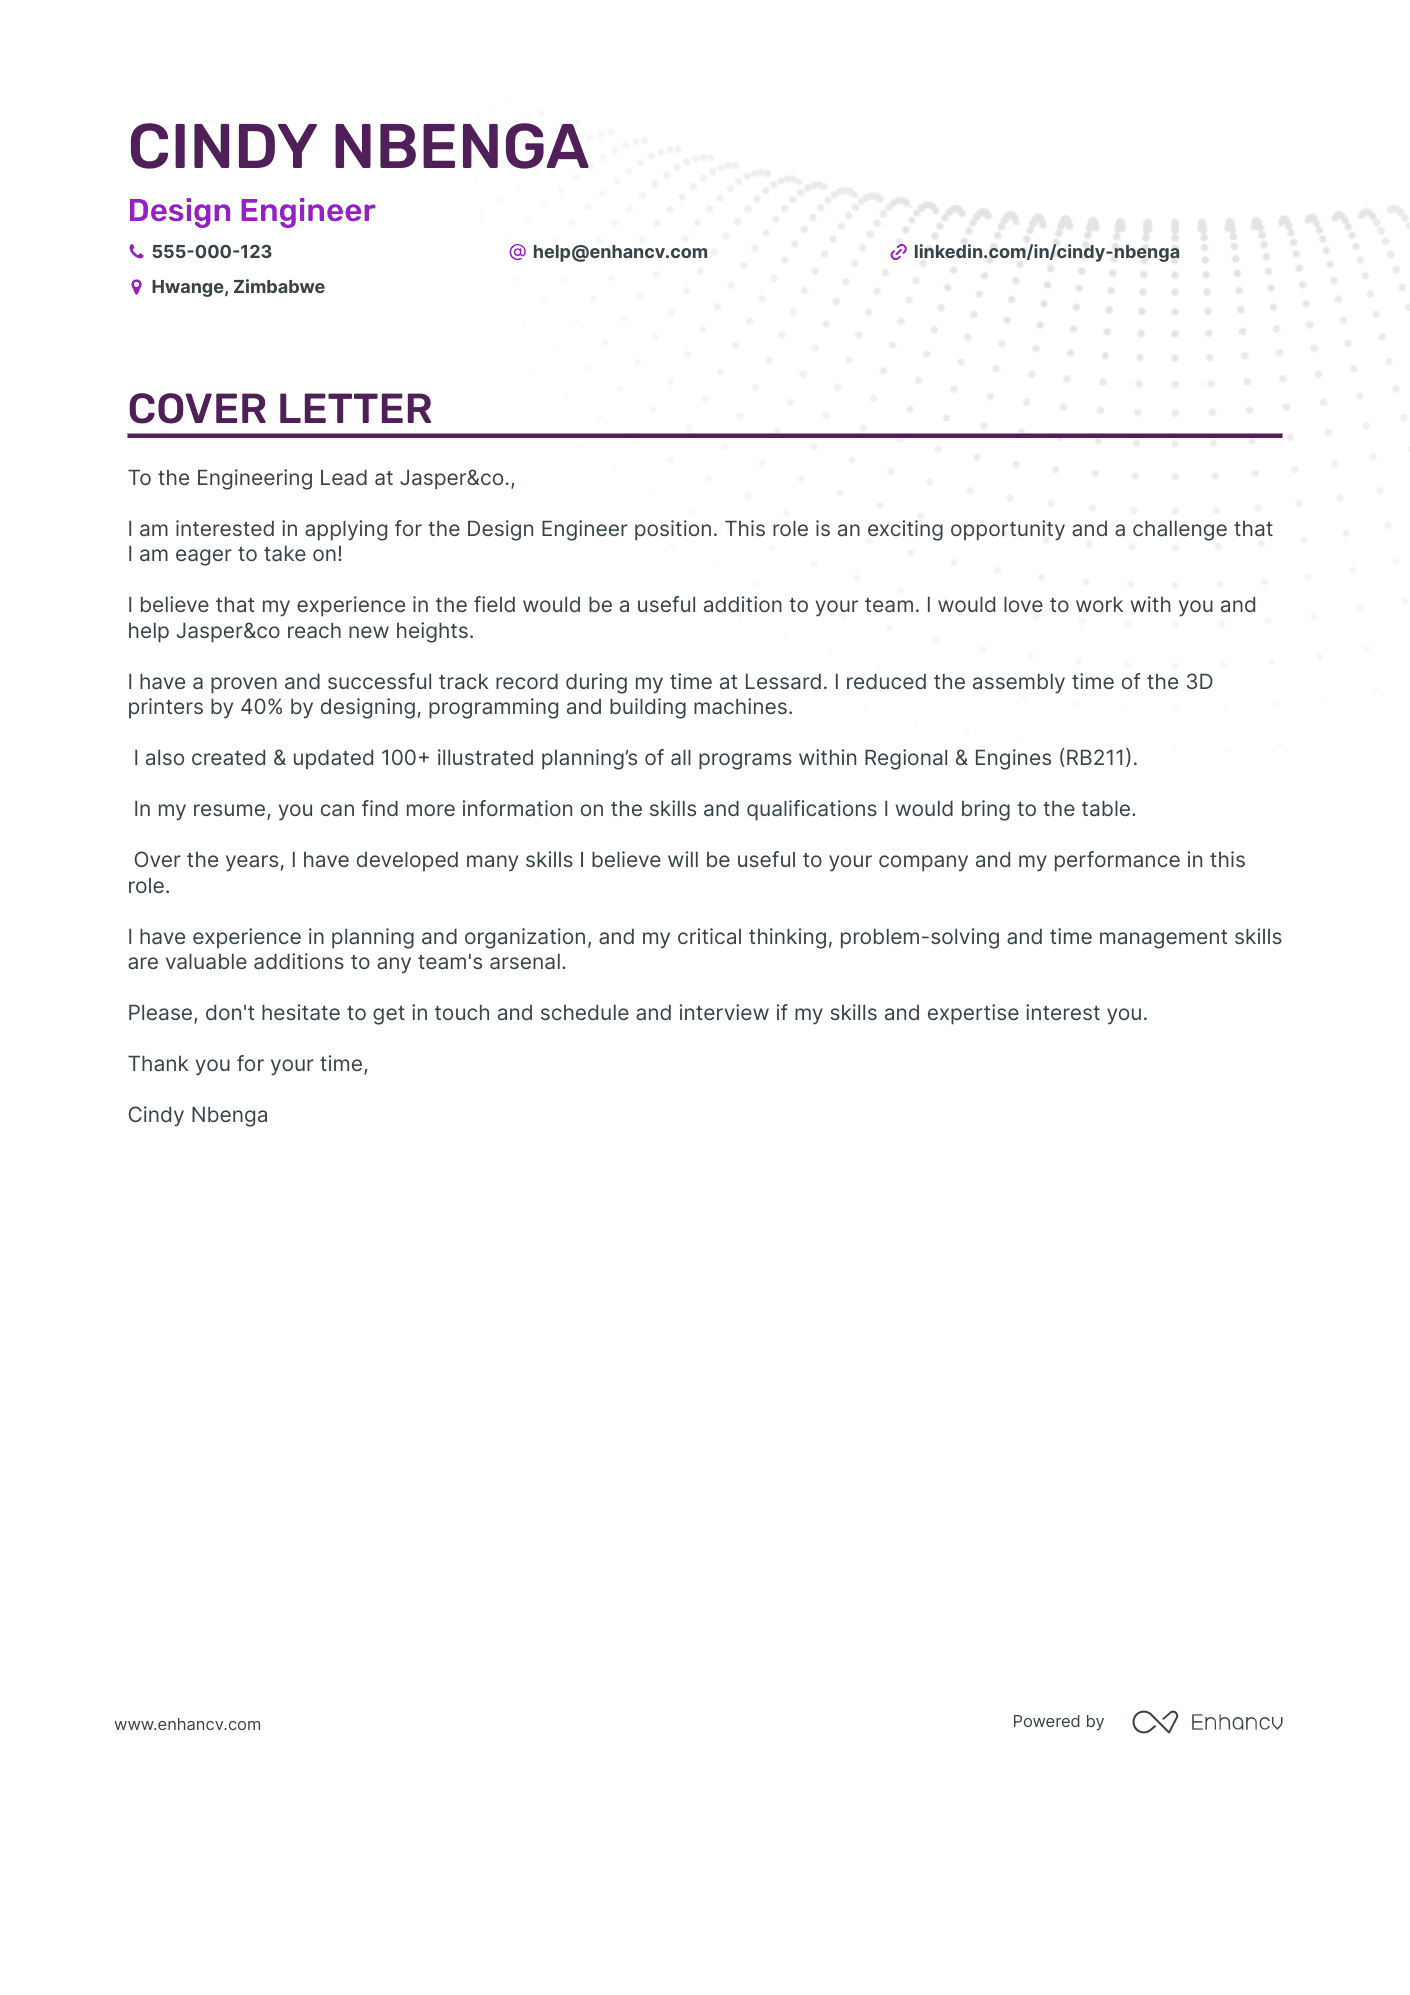 Design Engineer cover letter